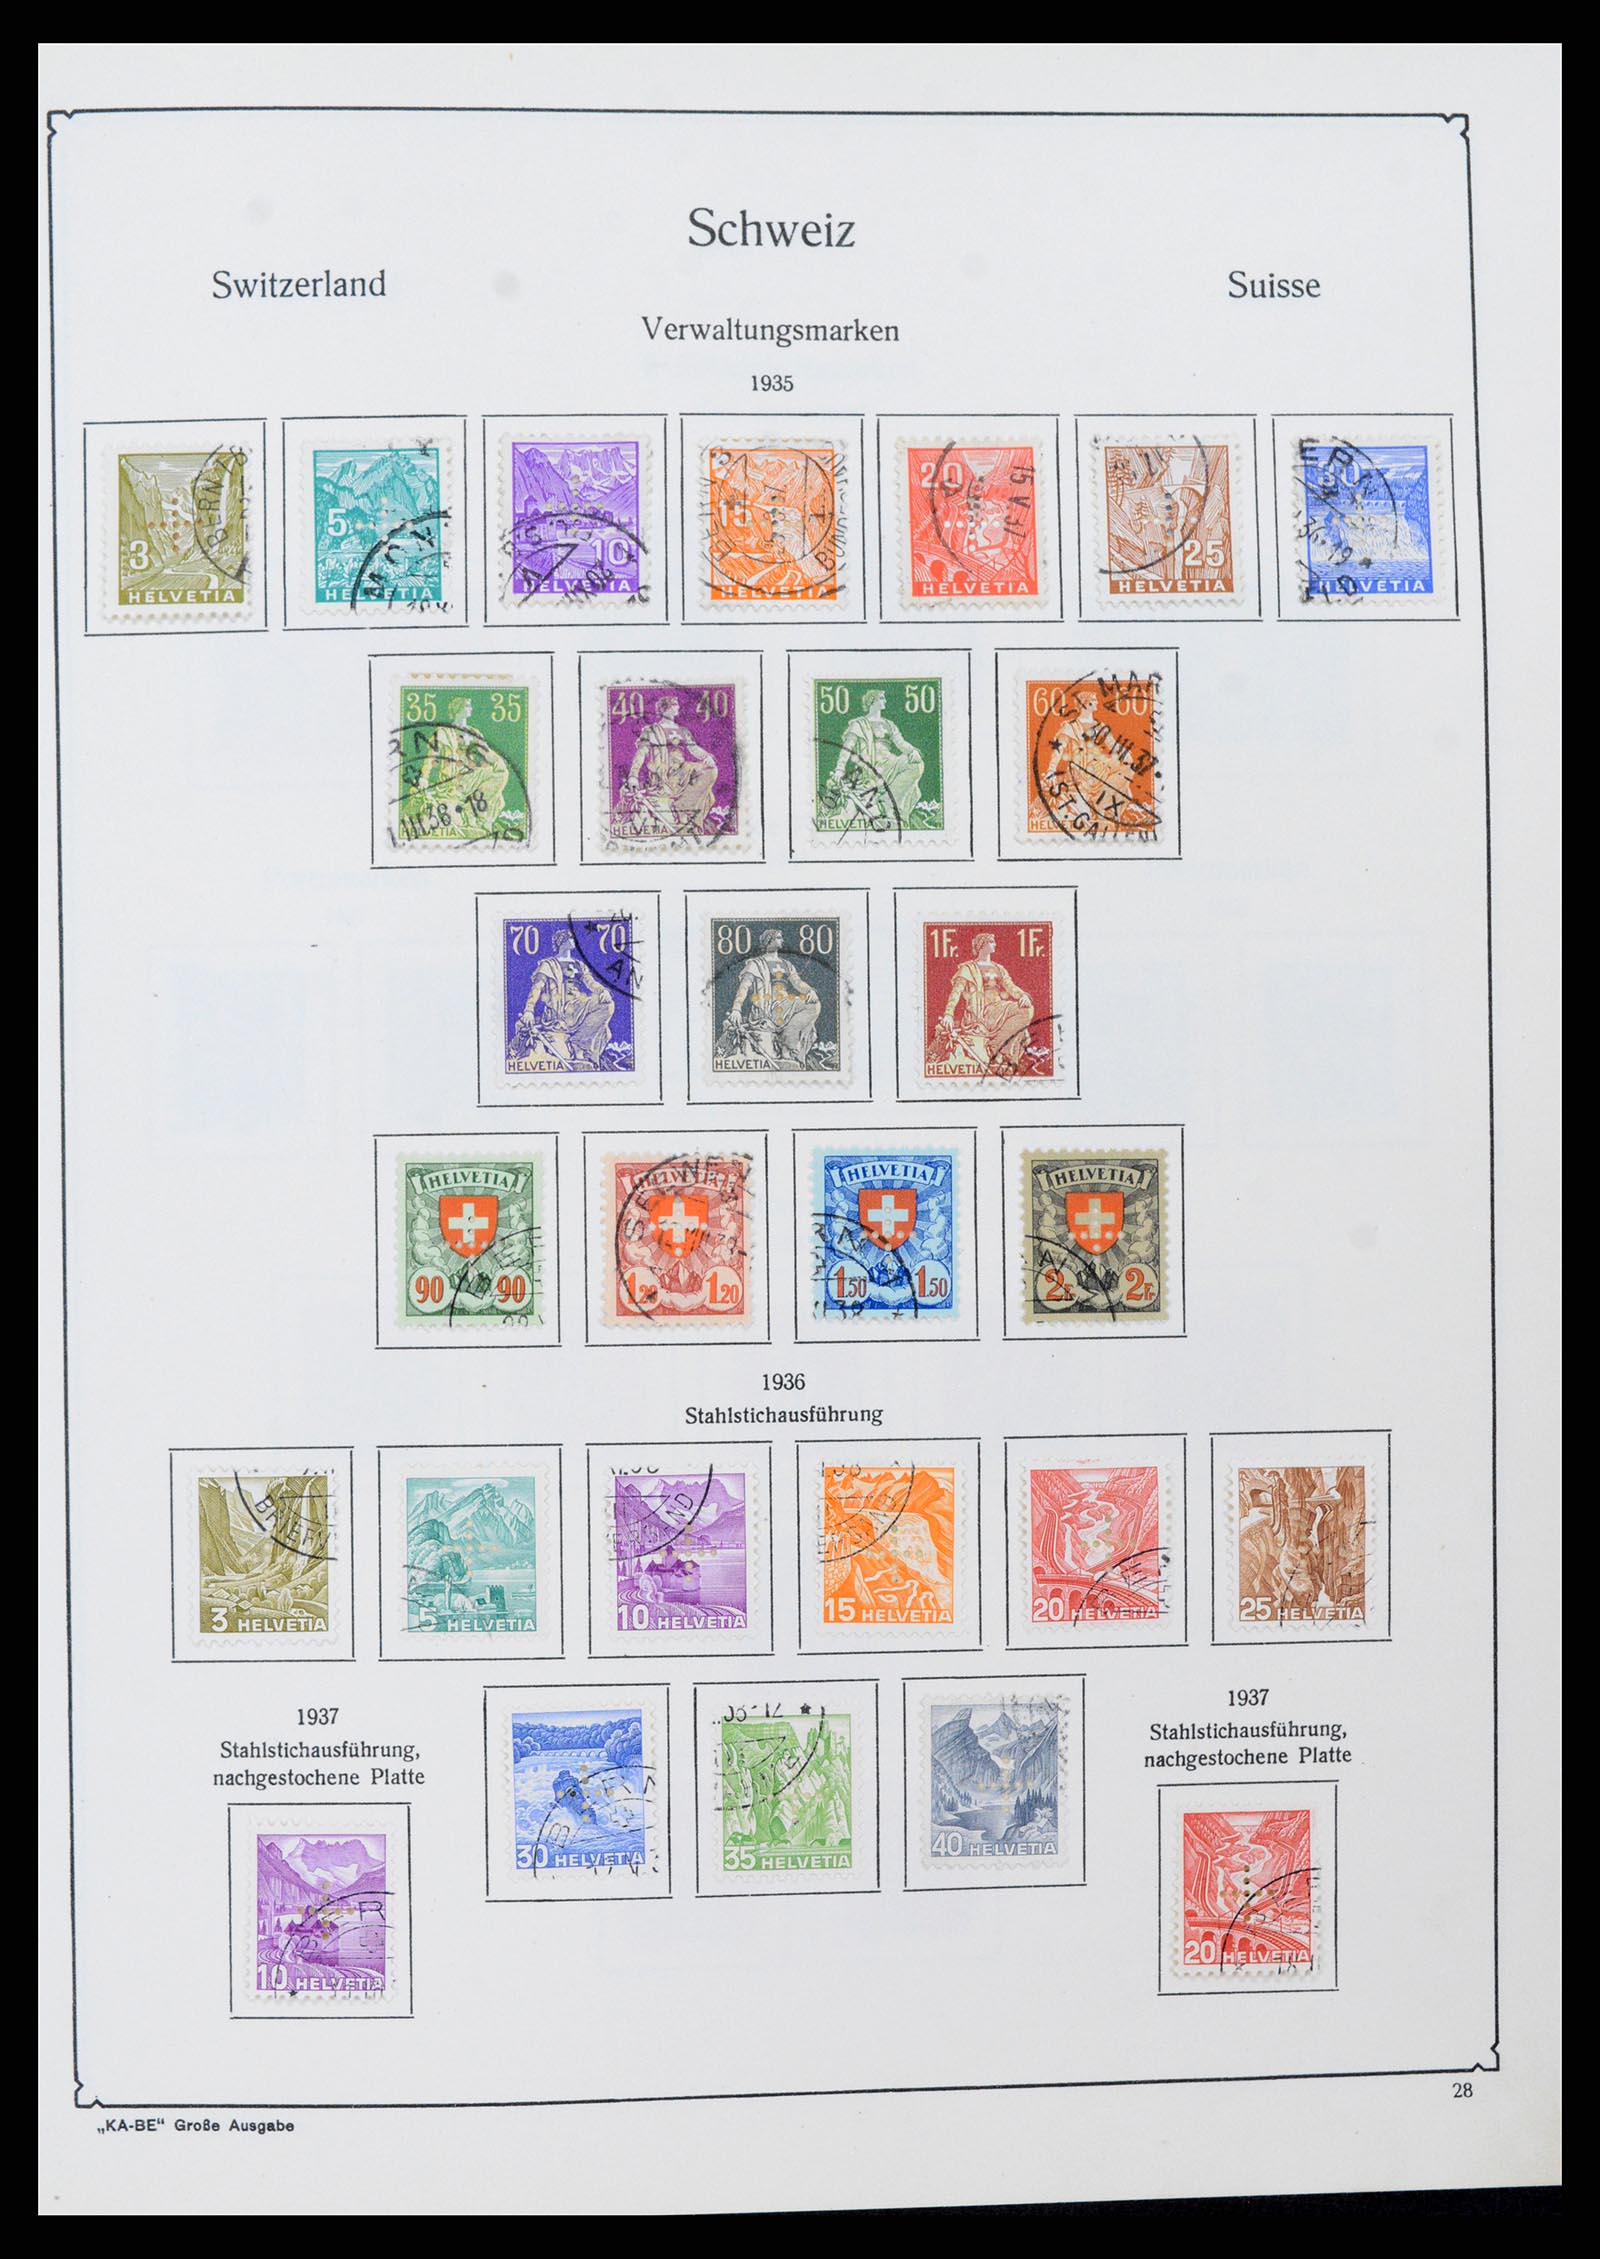 37588 027 - Stamp collection 37588 Switzerland 1854-1974.